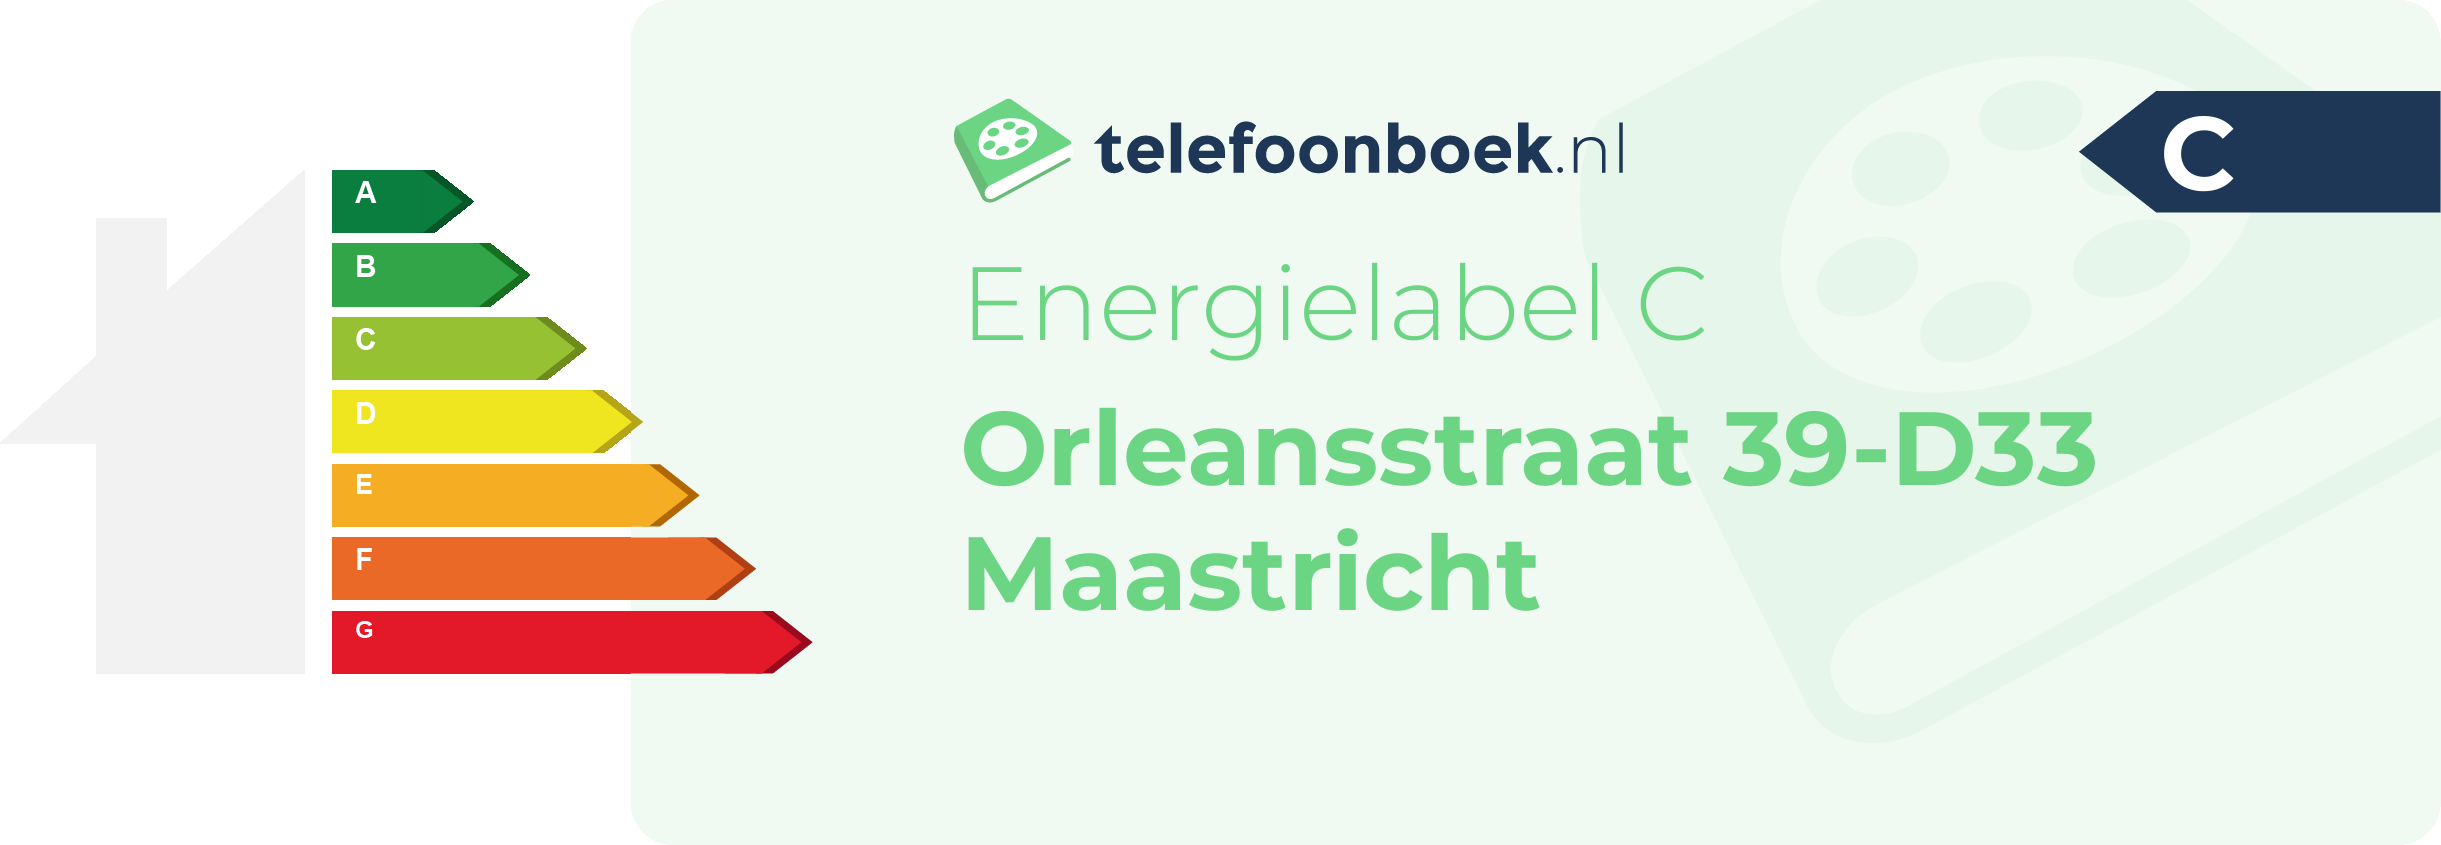 Energielabel Orleansstraat 39-D33 Maastricht